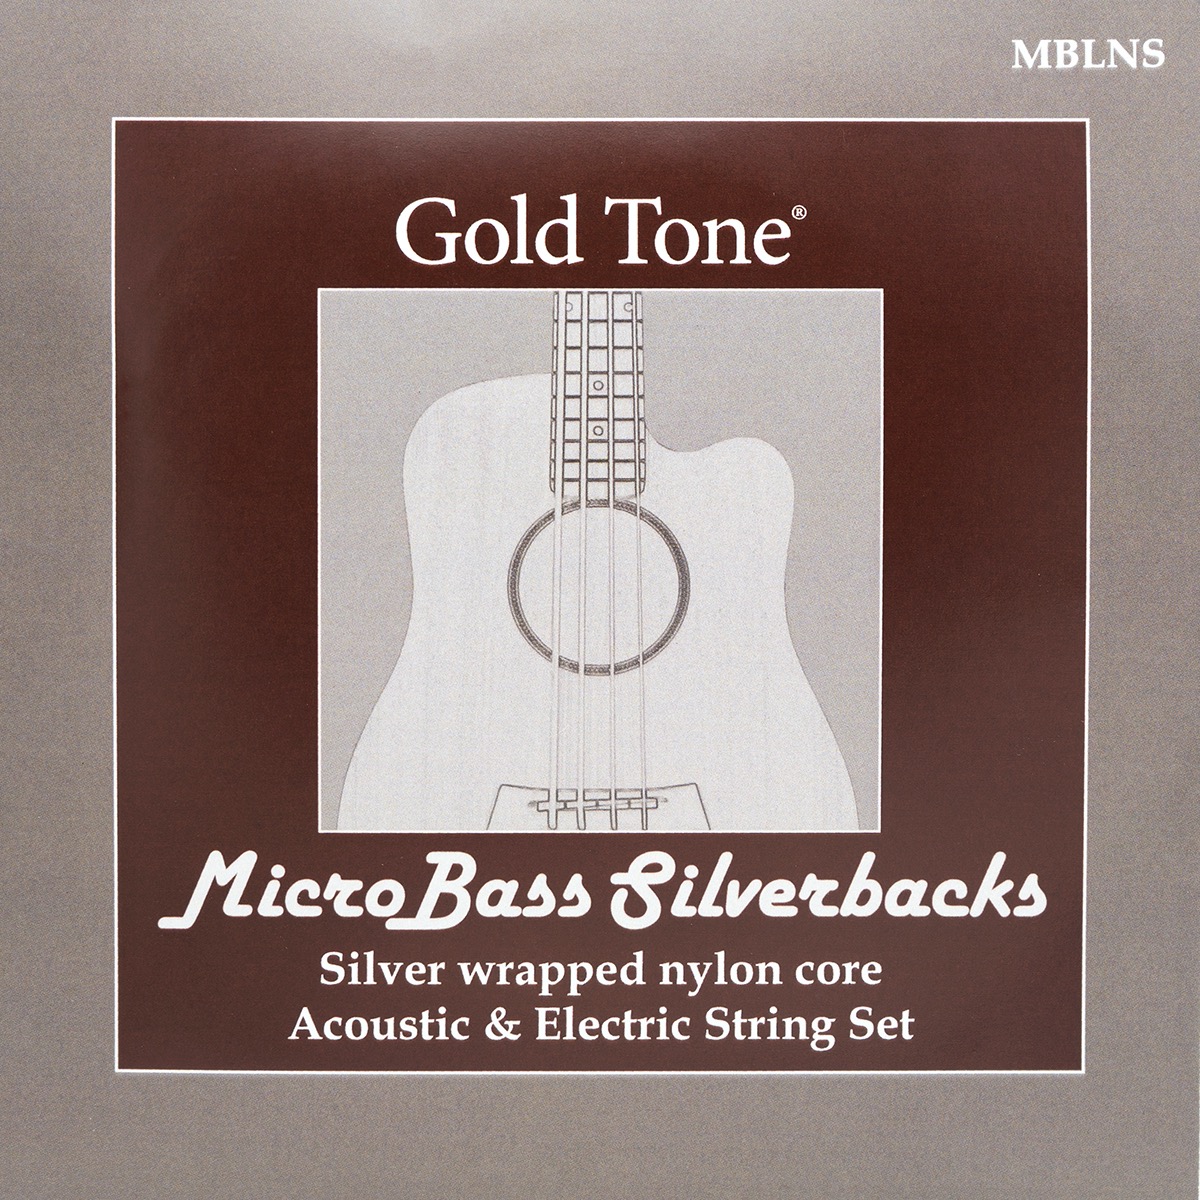 Gold Tone mblns Micro bass silverbacks Set acoustic 4 string bassnaren